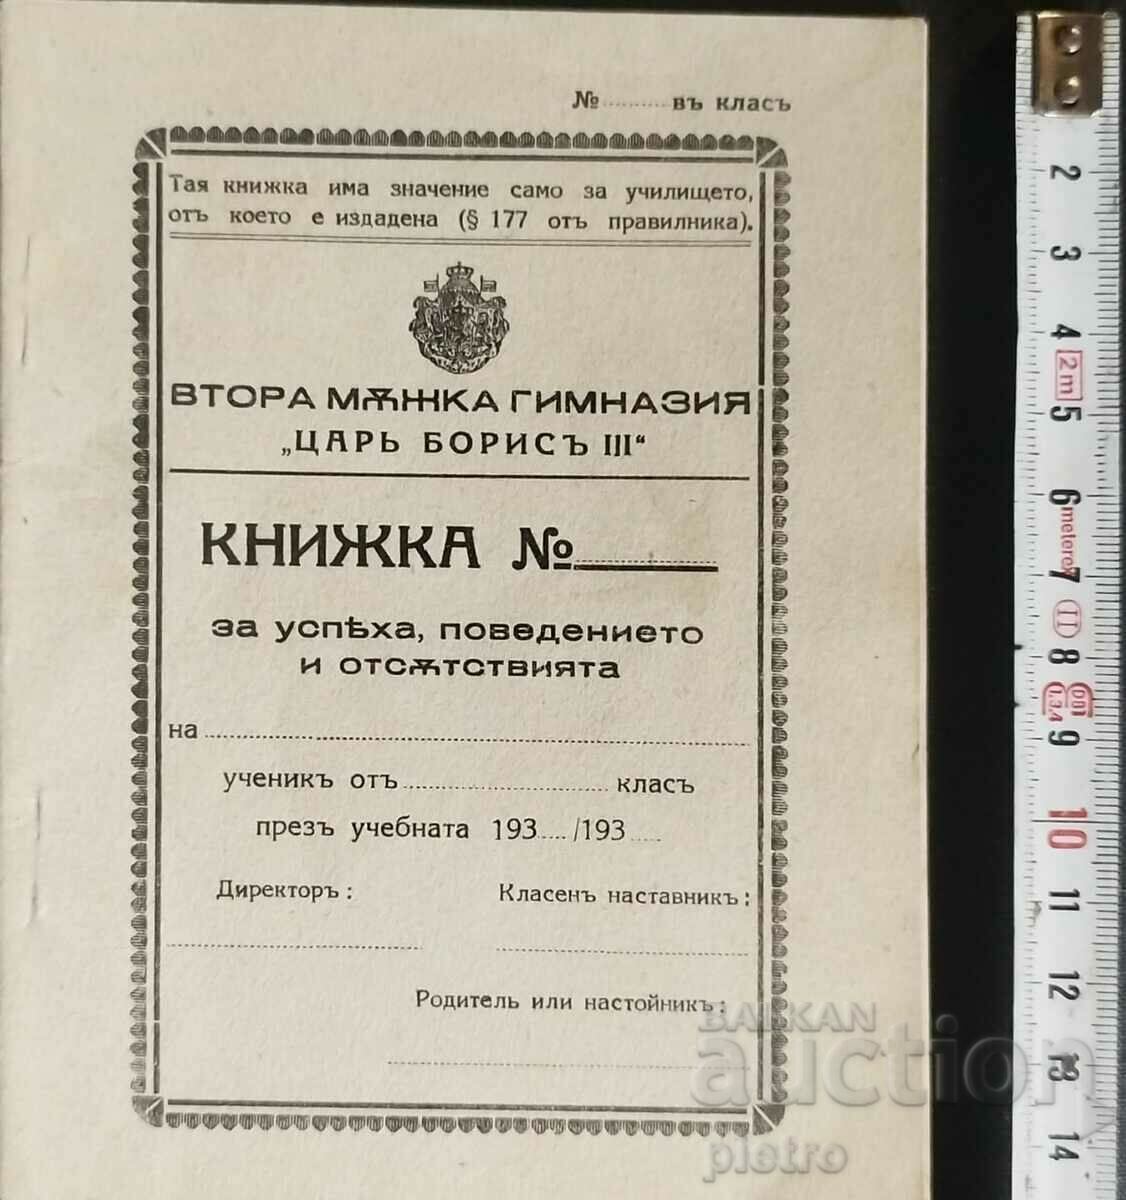 Kingdom of Bulgaria Document SECOND MALE HIGH SCHOOL "KING BORIS